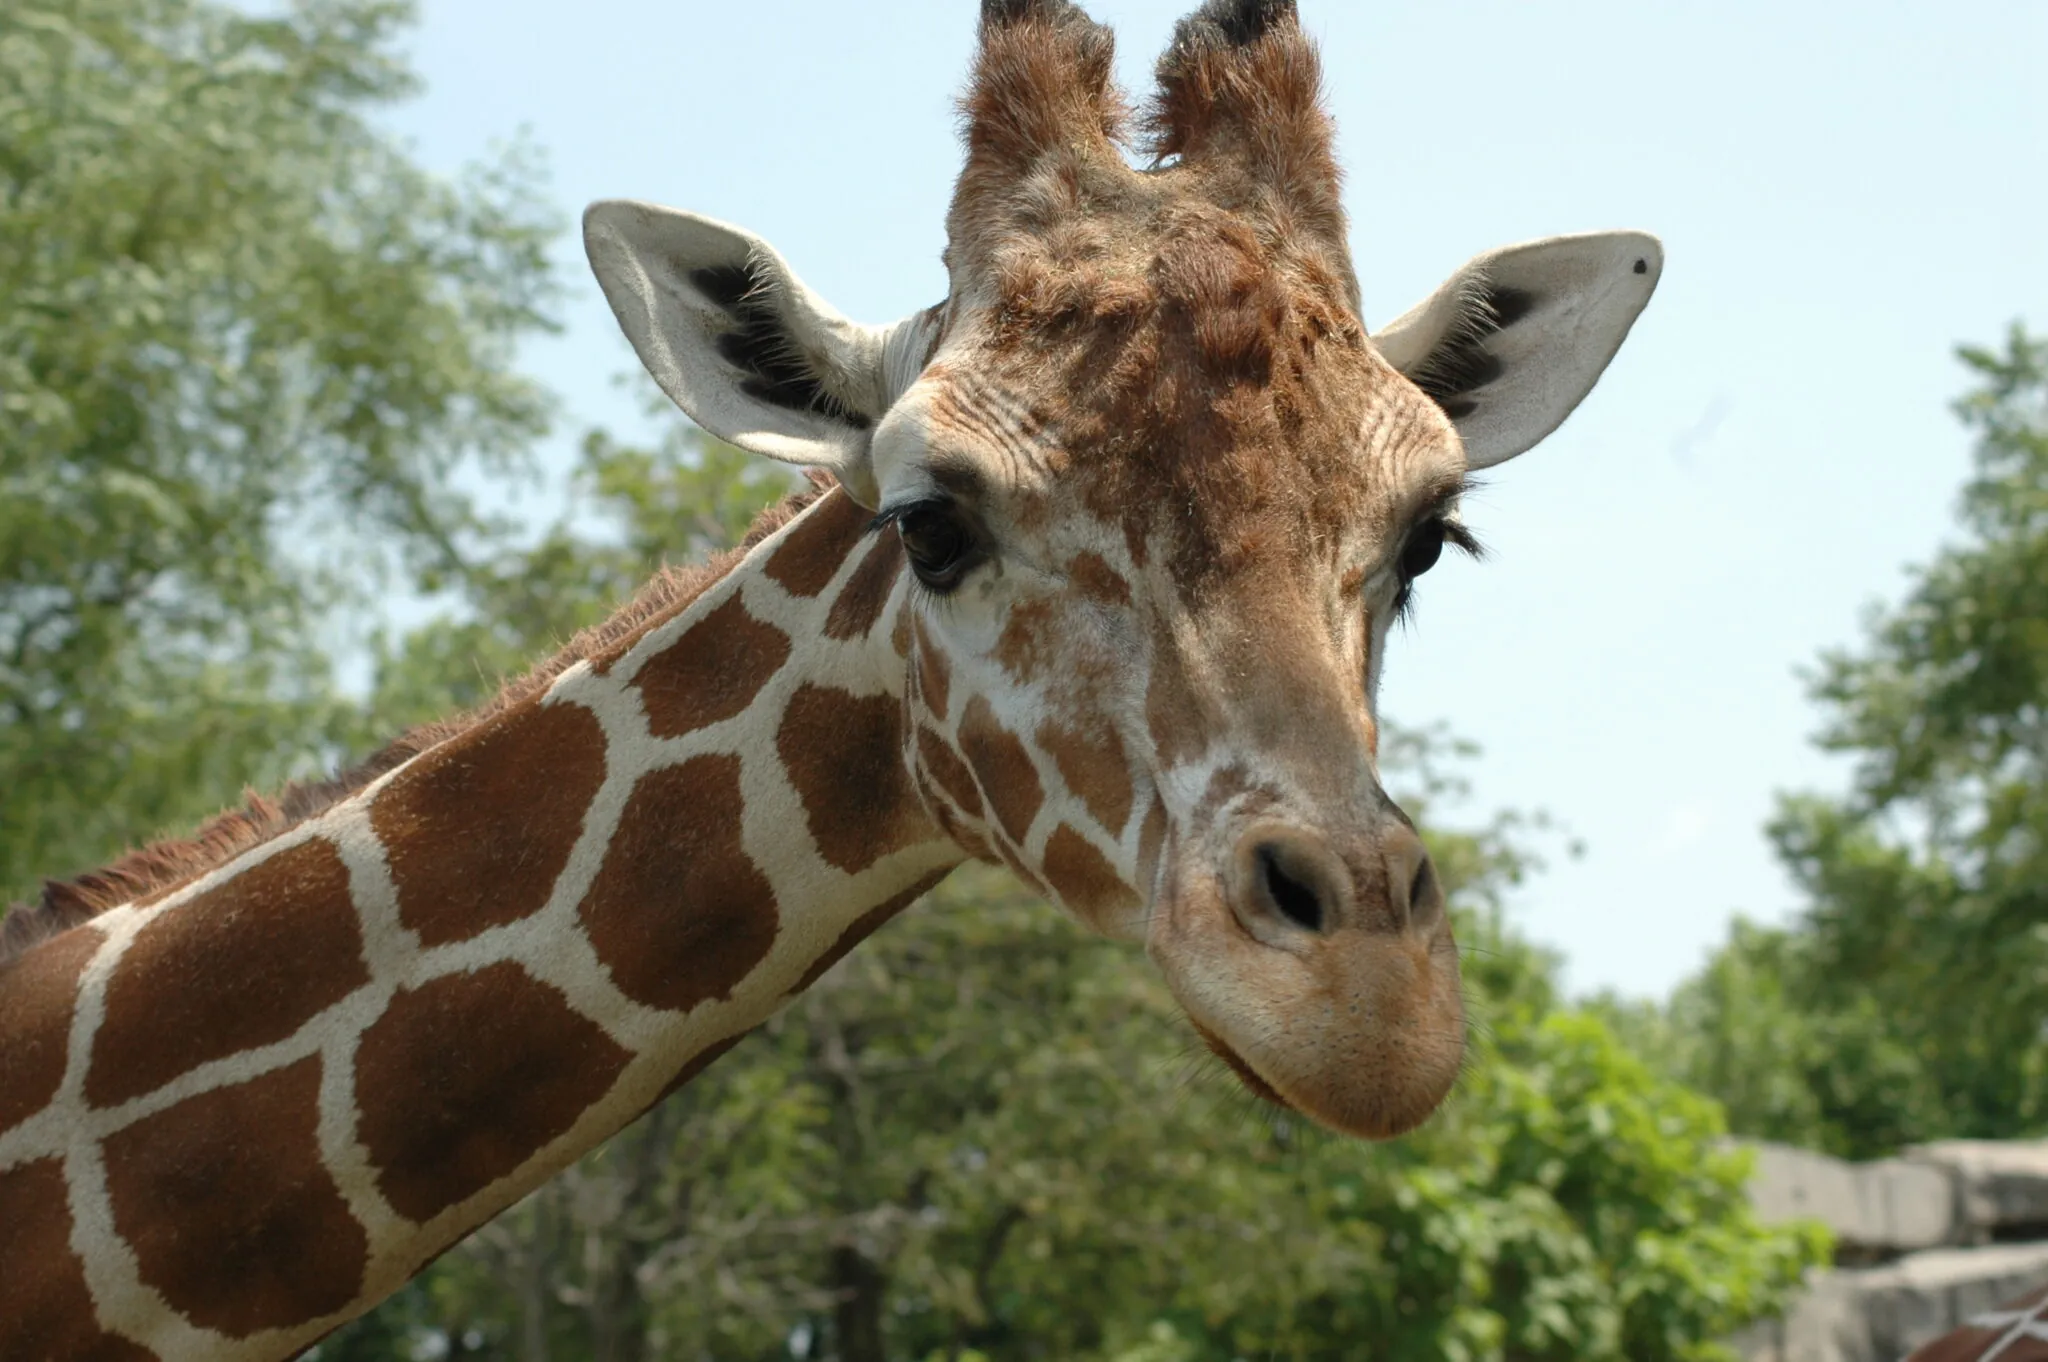 Giraffe head and neck